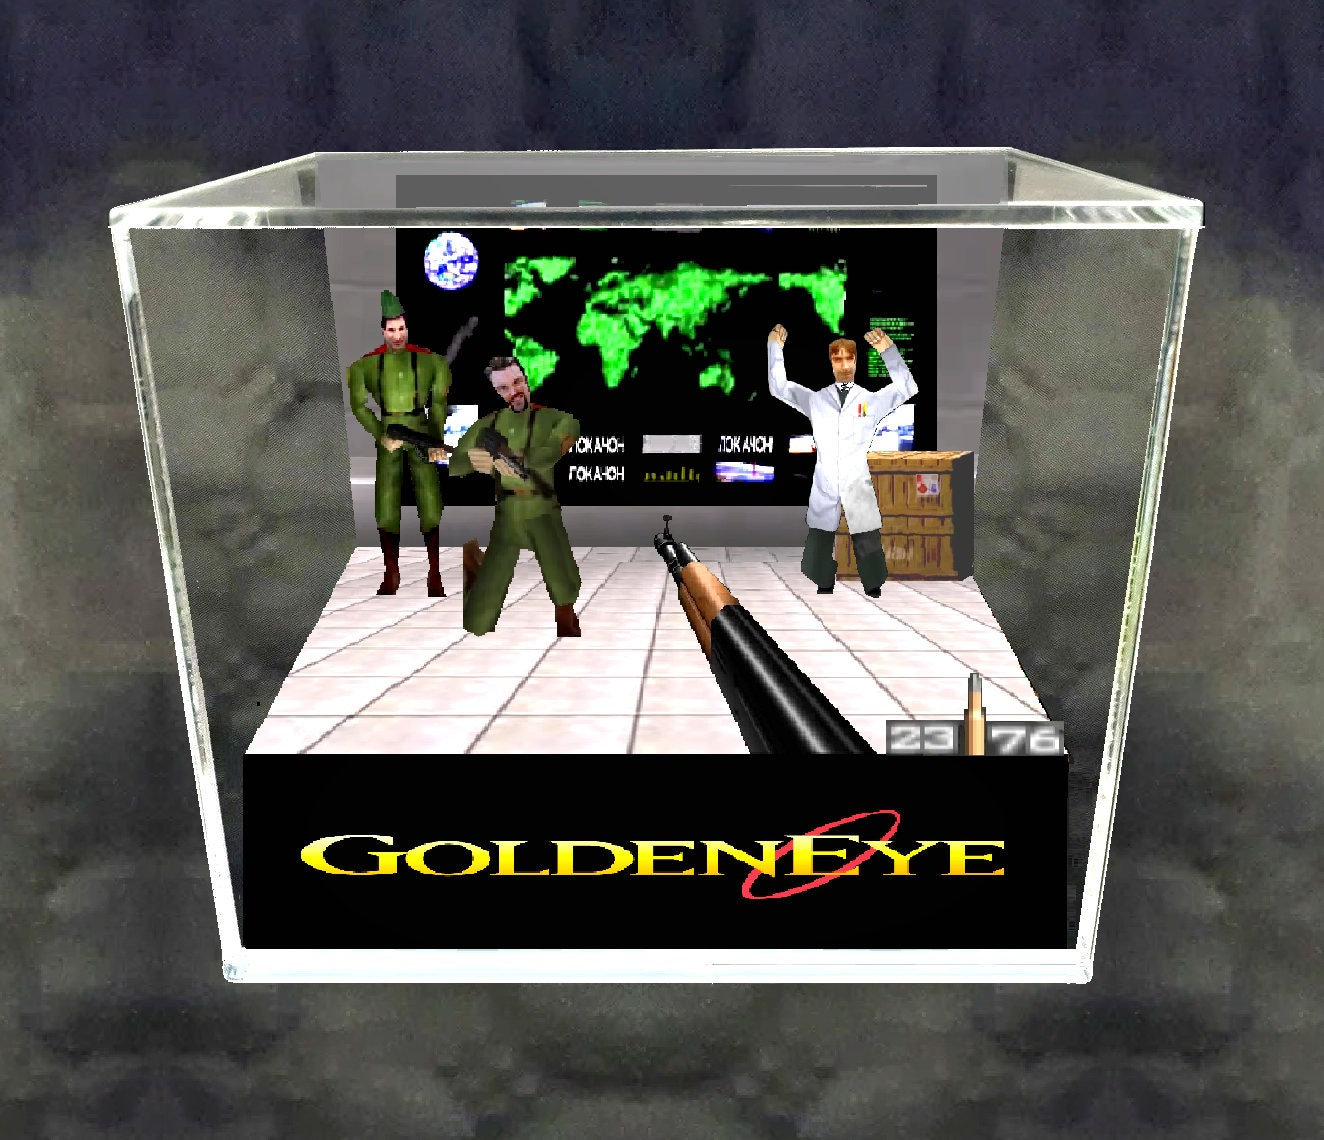 Goldeneye 007 - Wii : r/customcovers